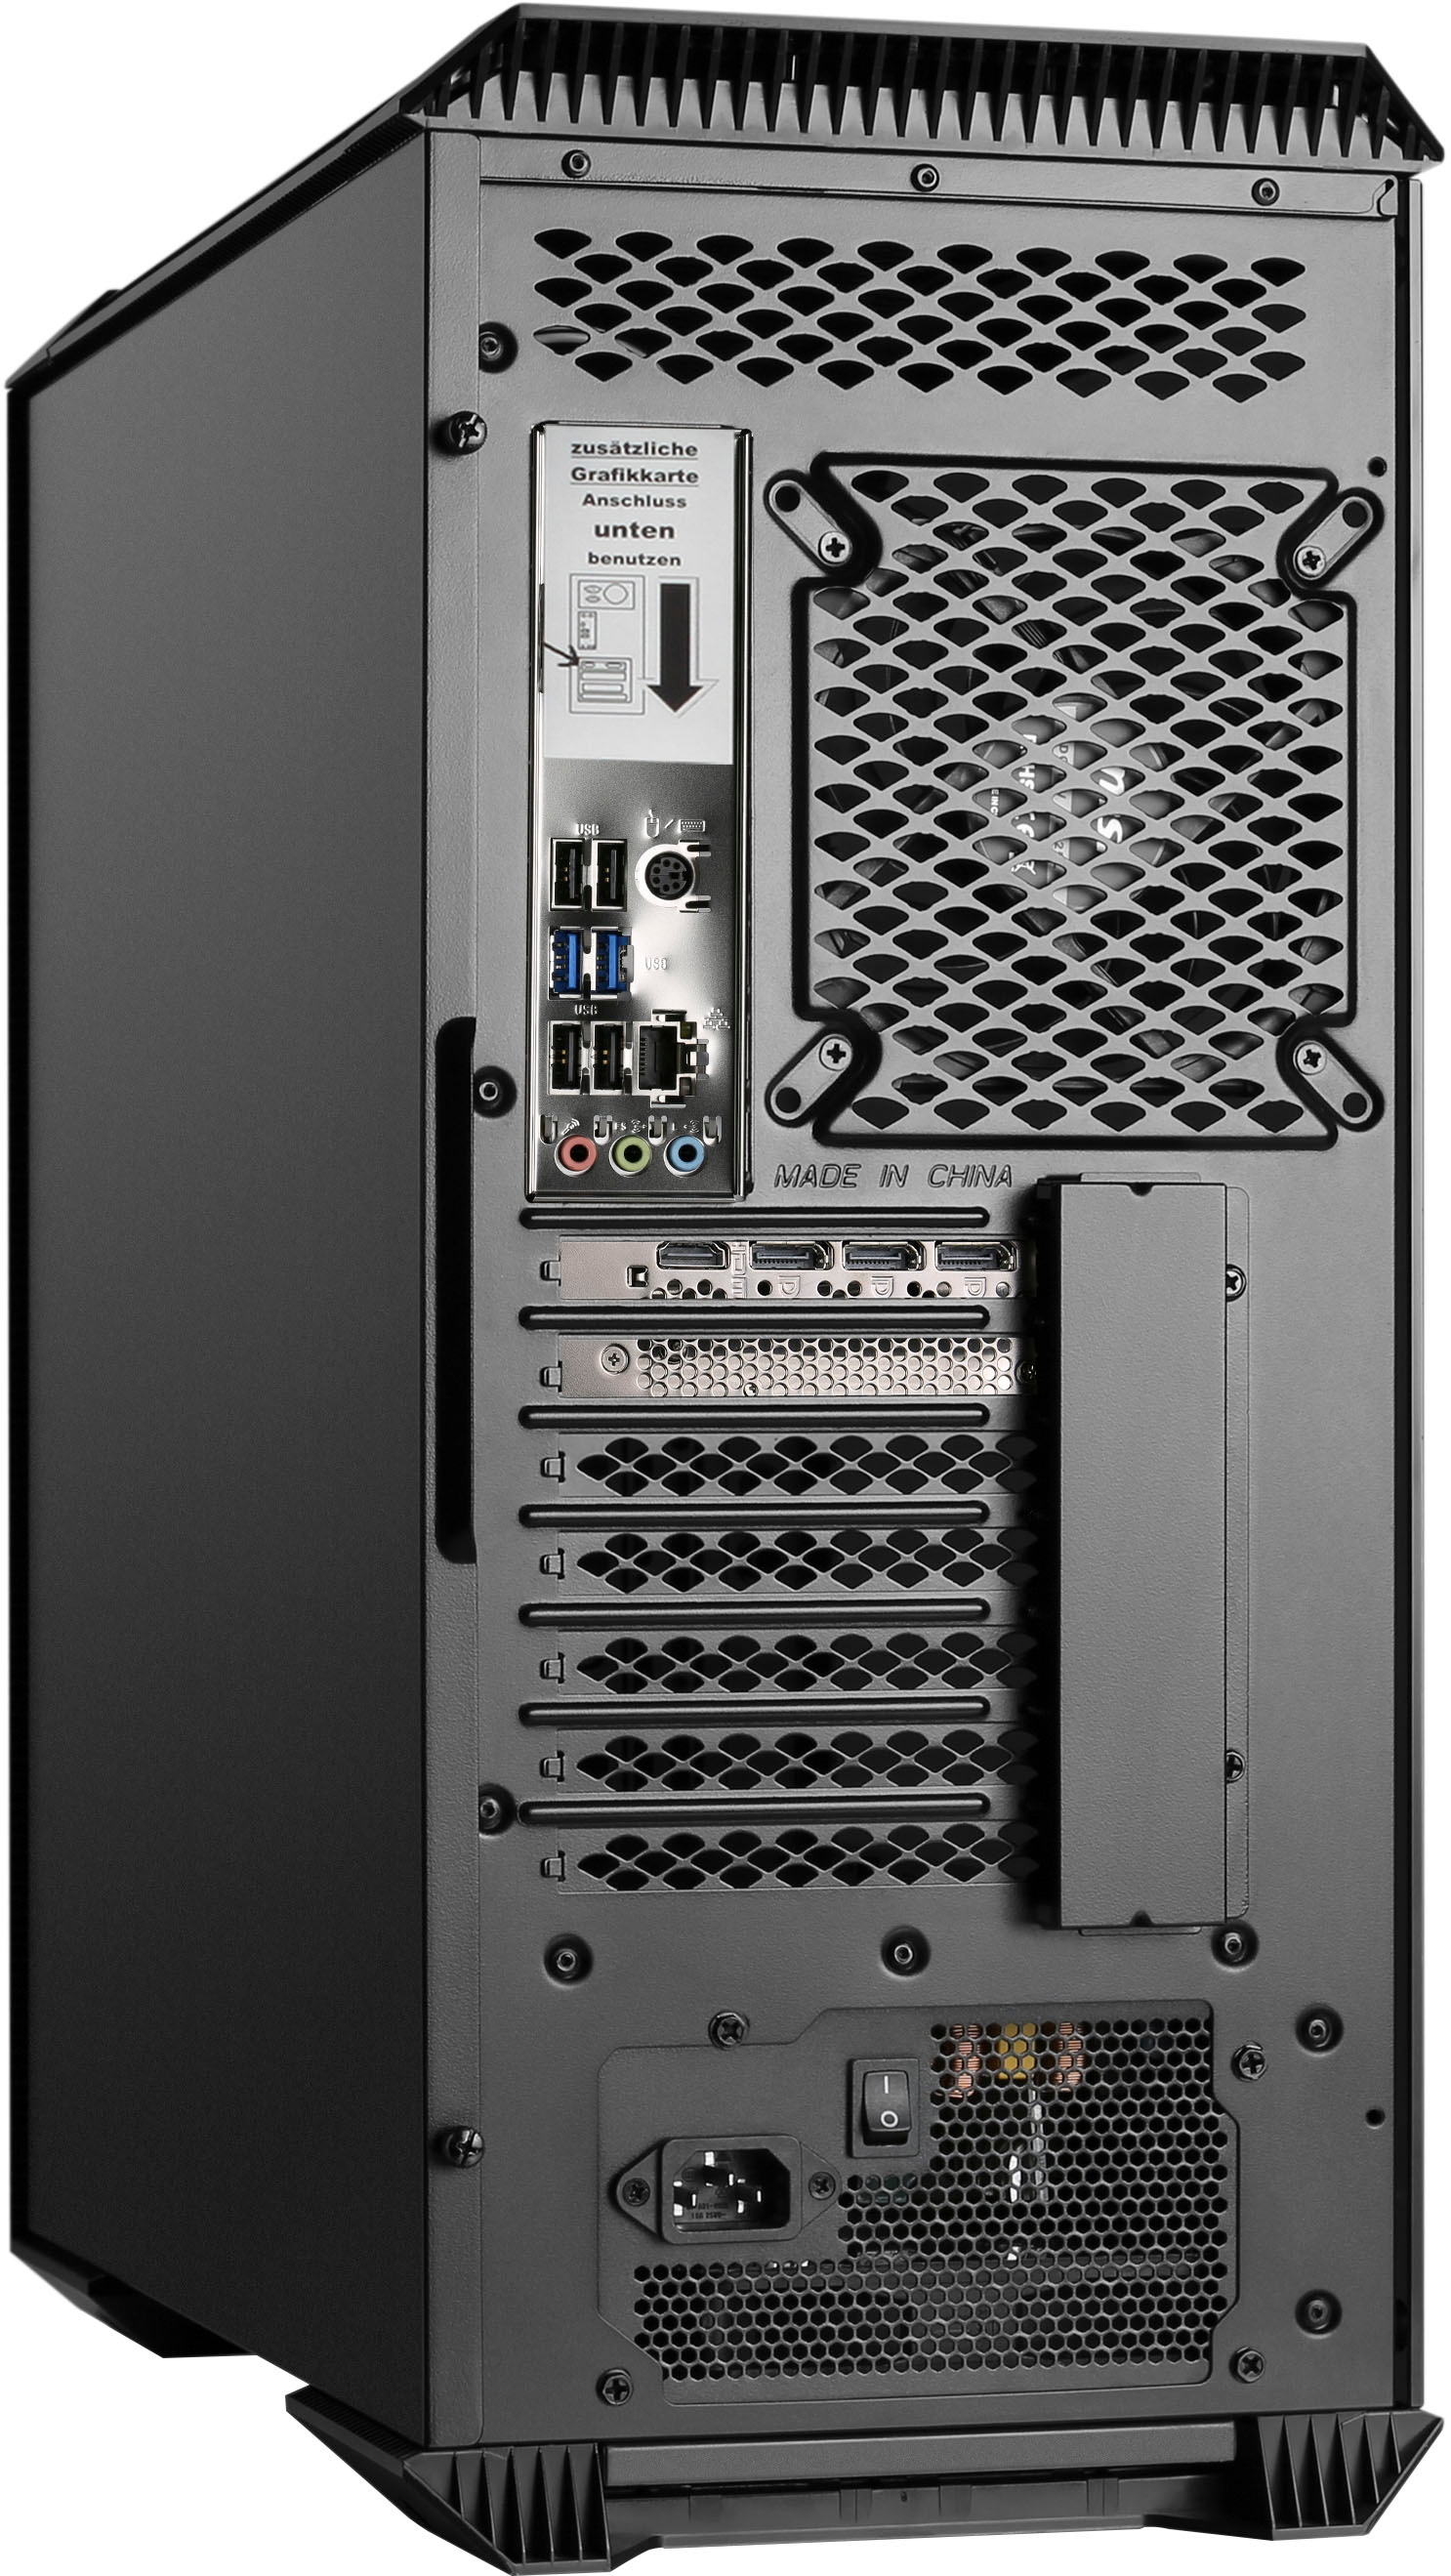 MSI »Hydrox V29530 jetzt ➥ Edition« CSL Dragon shoppen | Jelmoli-Versand Gaming-PC Advanced